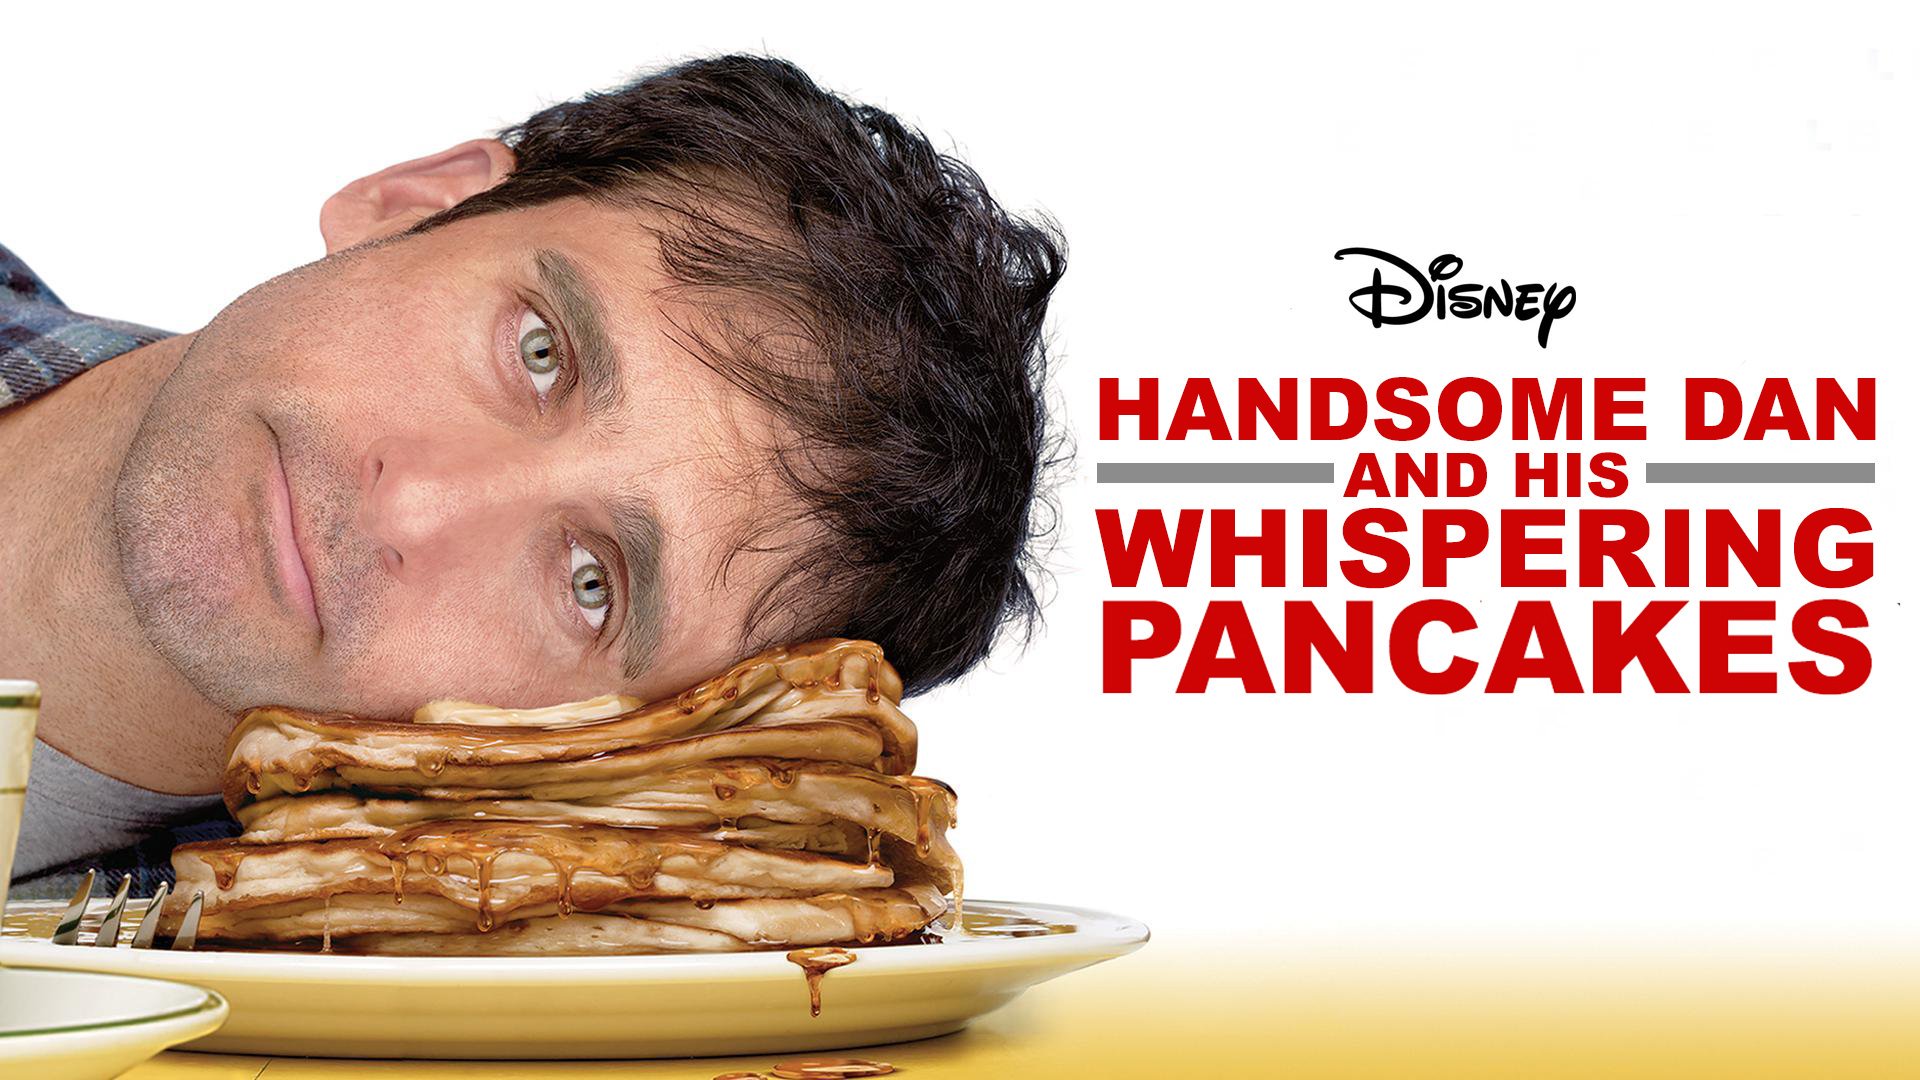 dan in real life movie poster - Disney Handsome Dan And His Whispering Pancakes